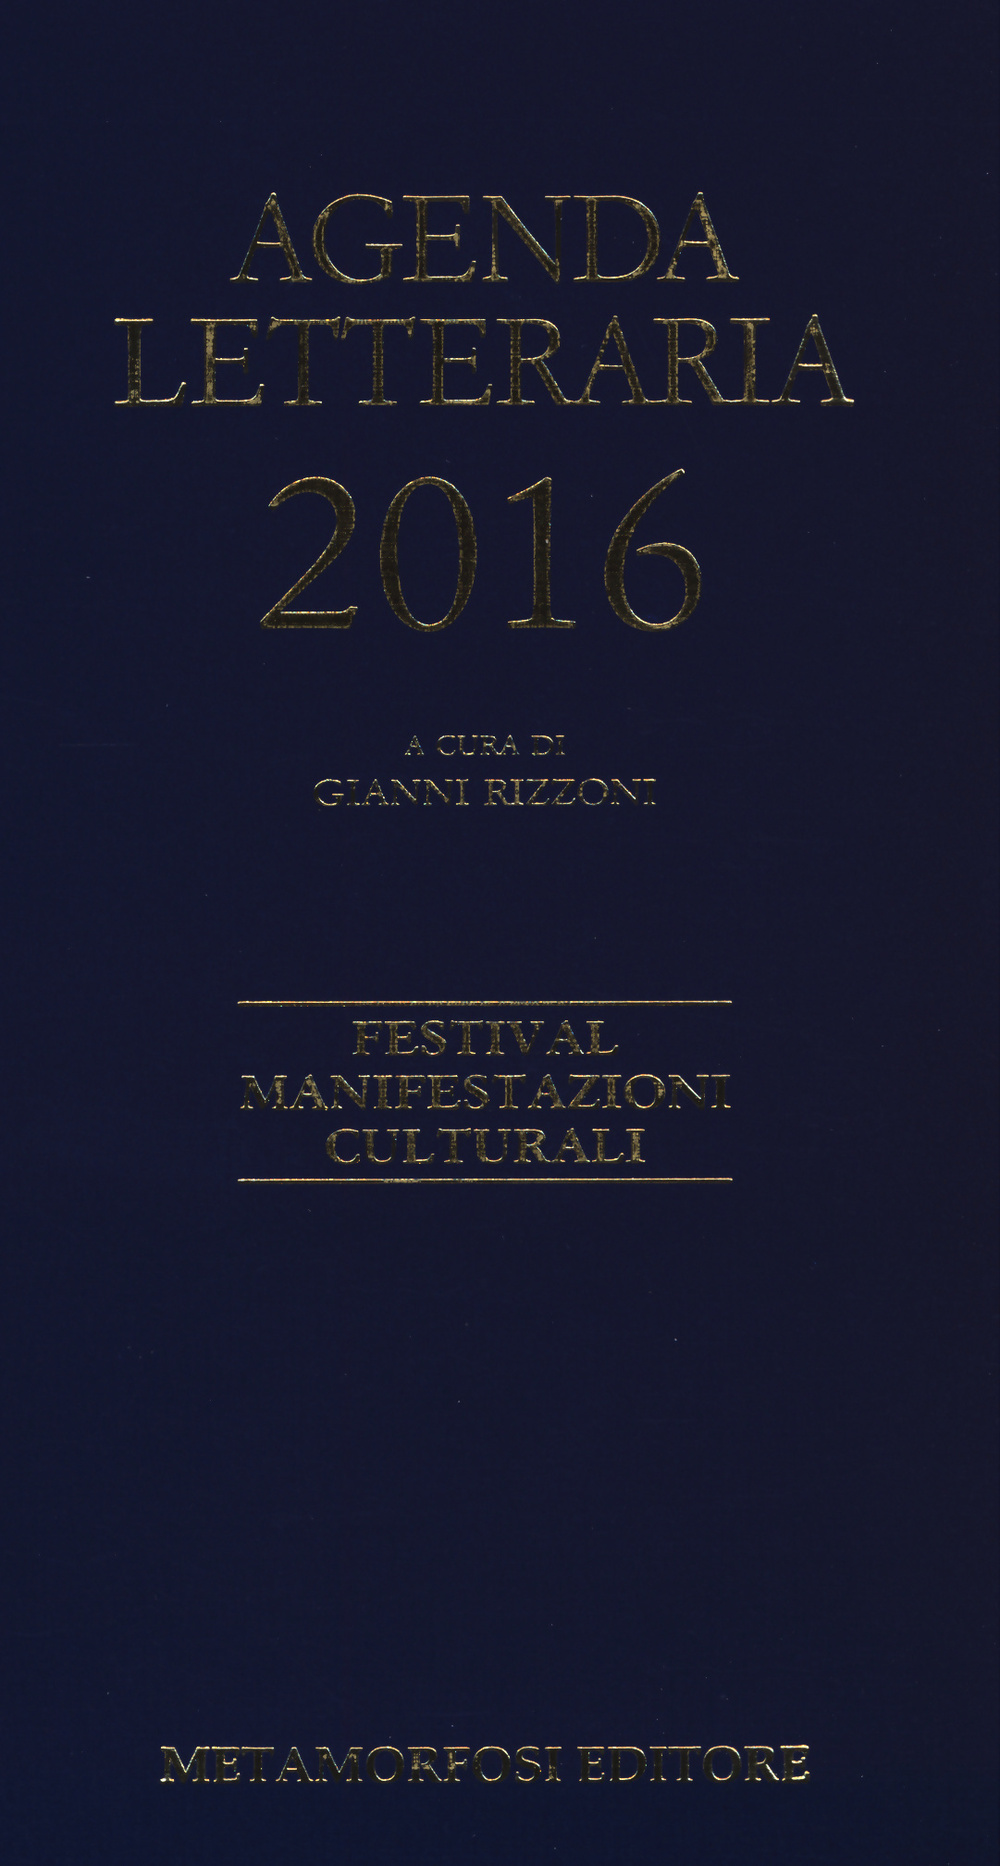 Agenda letteraria 2016